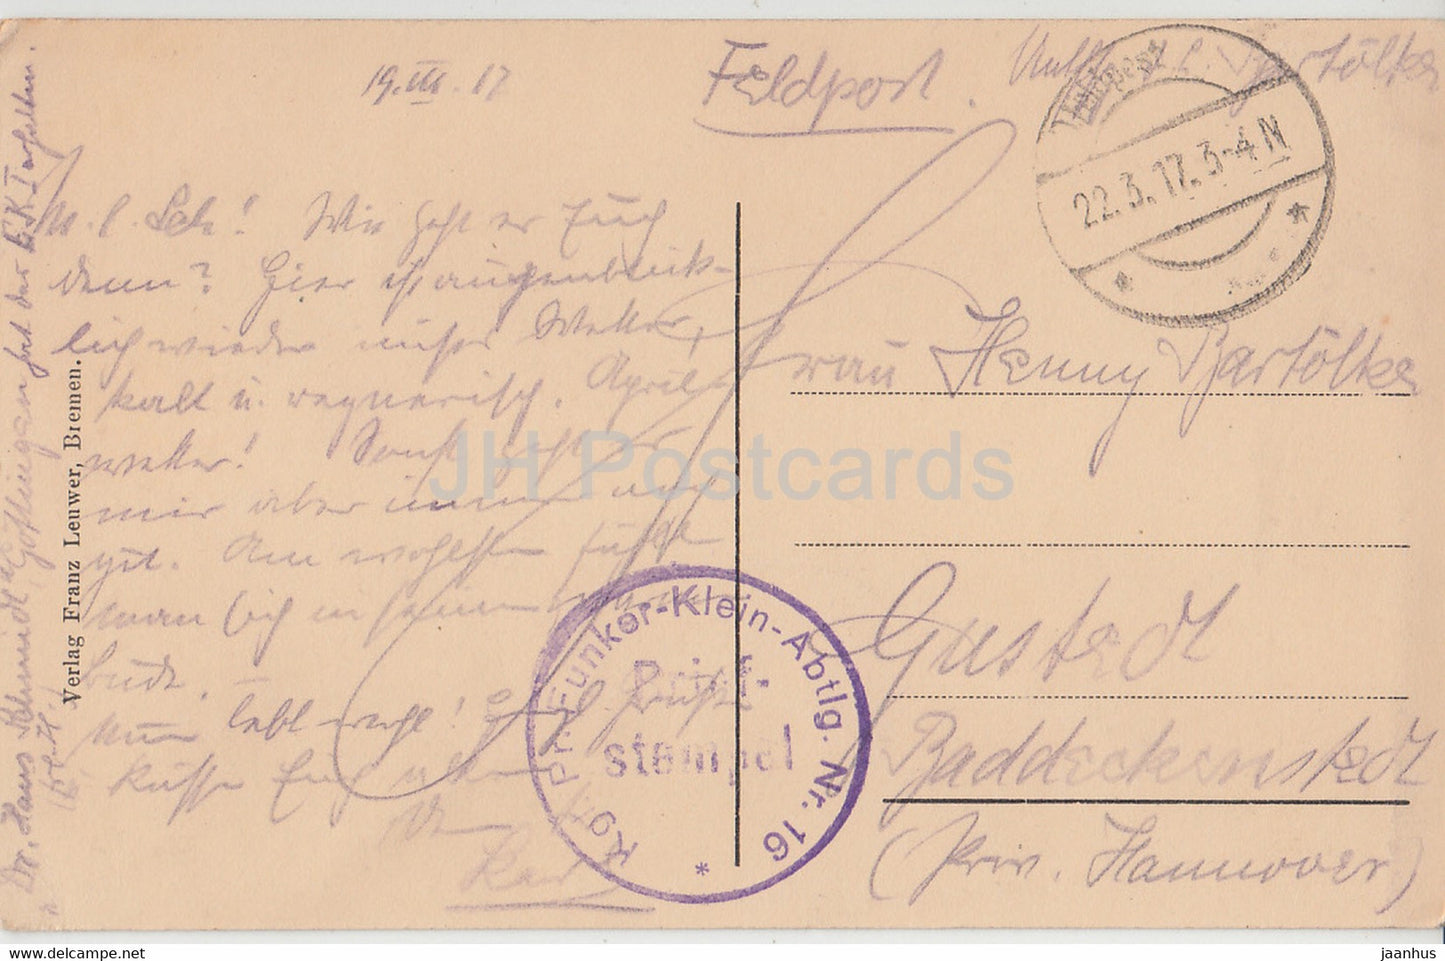 Cambrai - Rathaus - Feldpost - old postcard - 1917 - France - used